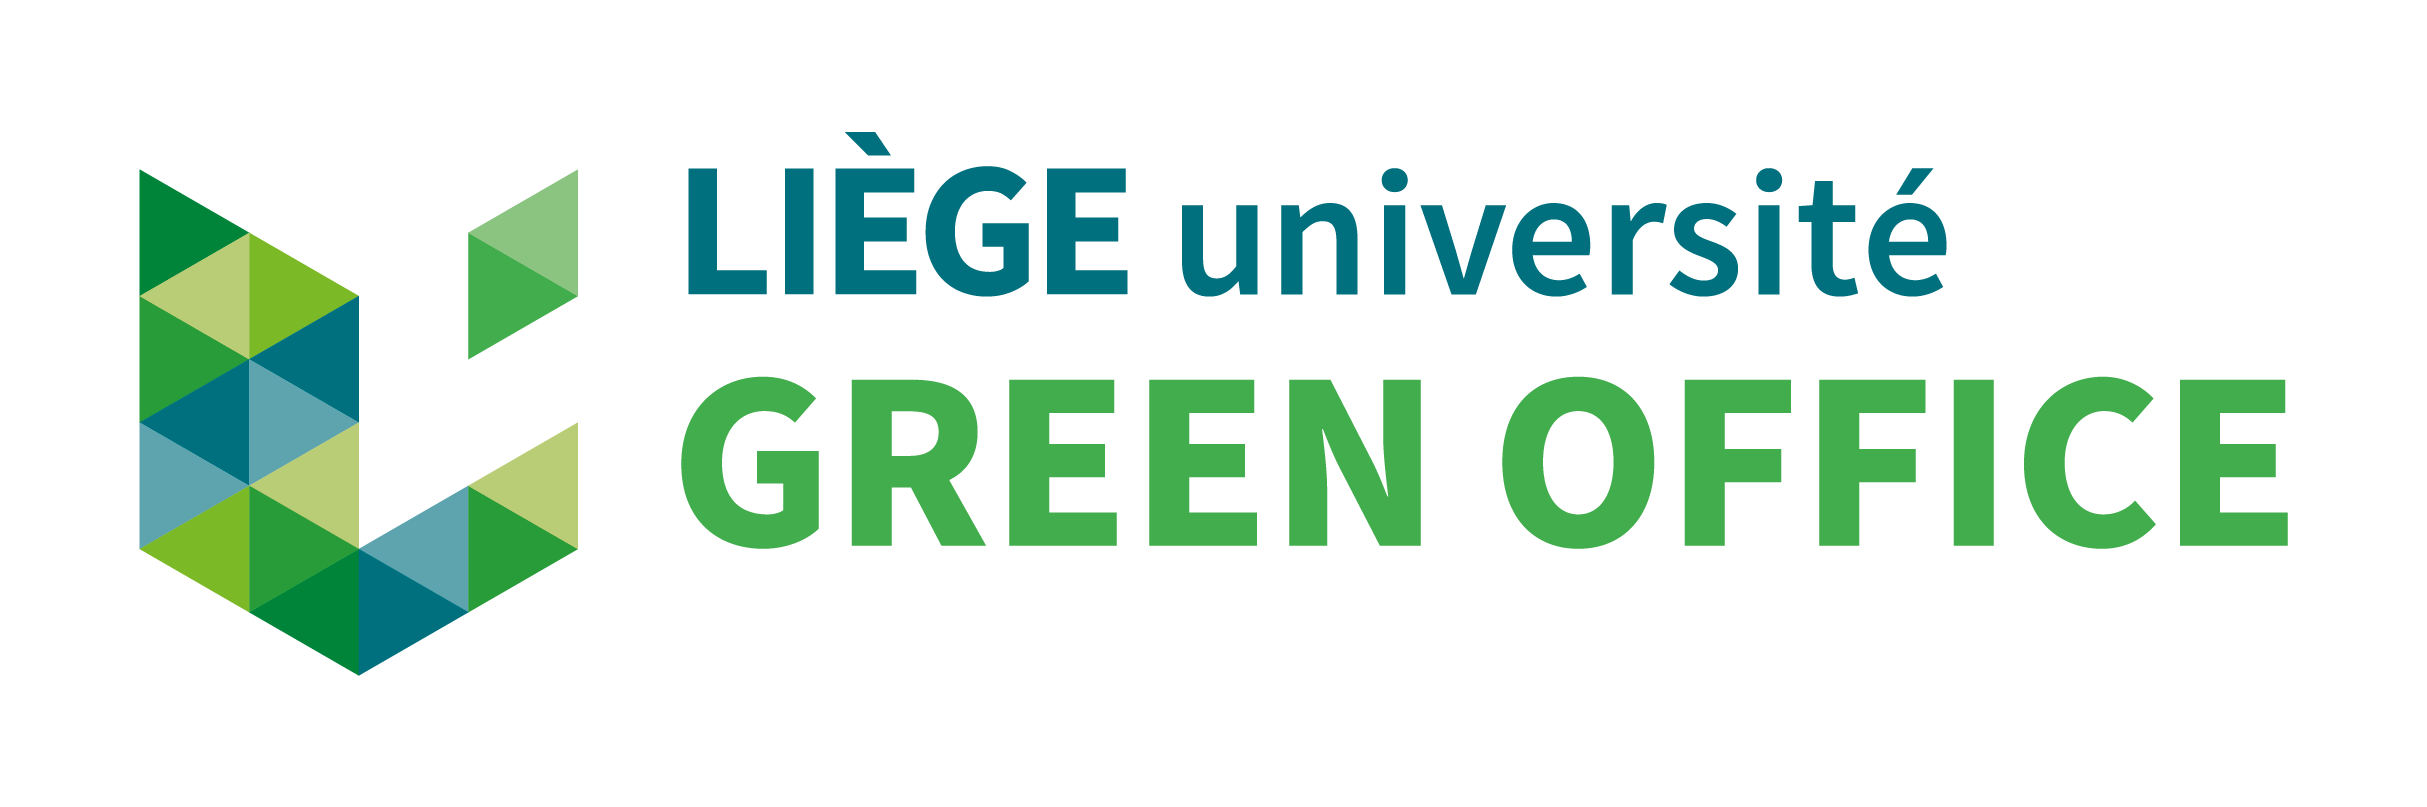 ULiege-Green-Office-logo RVB